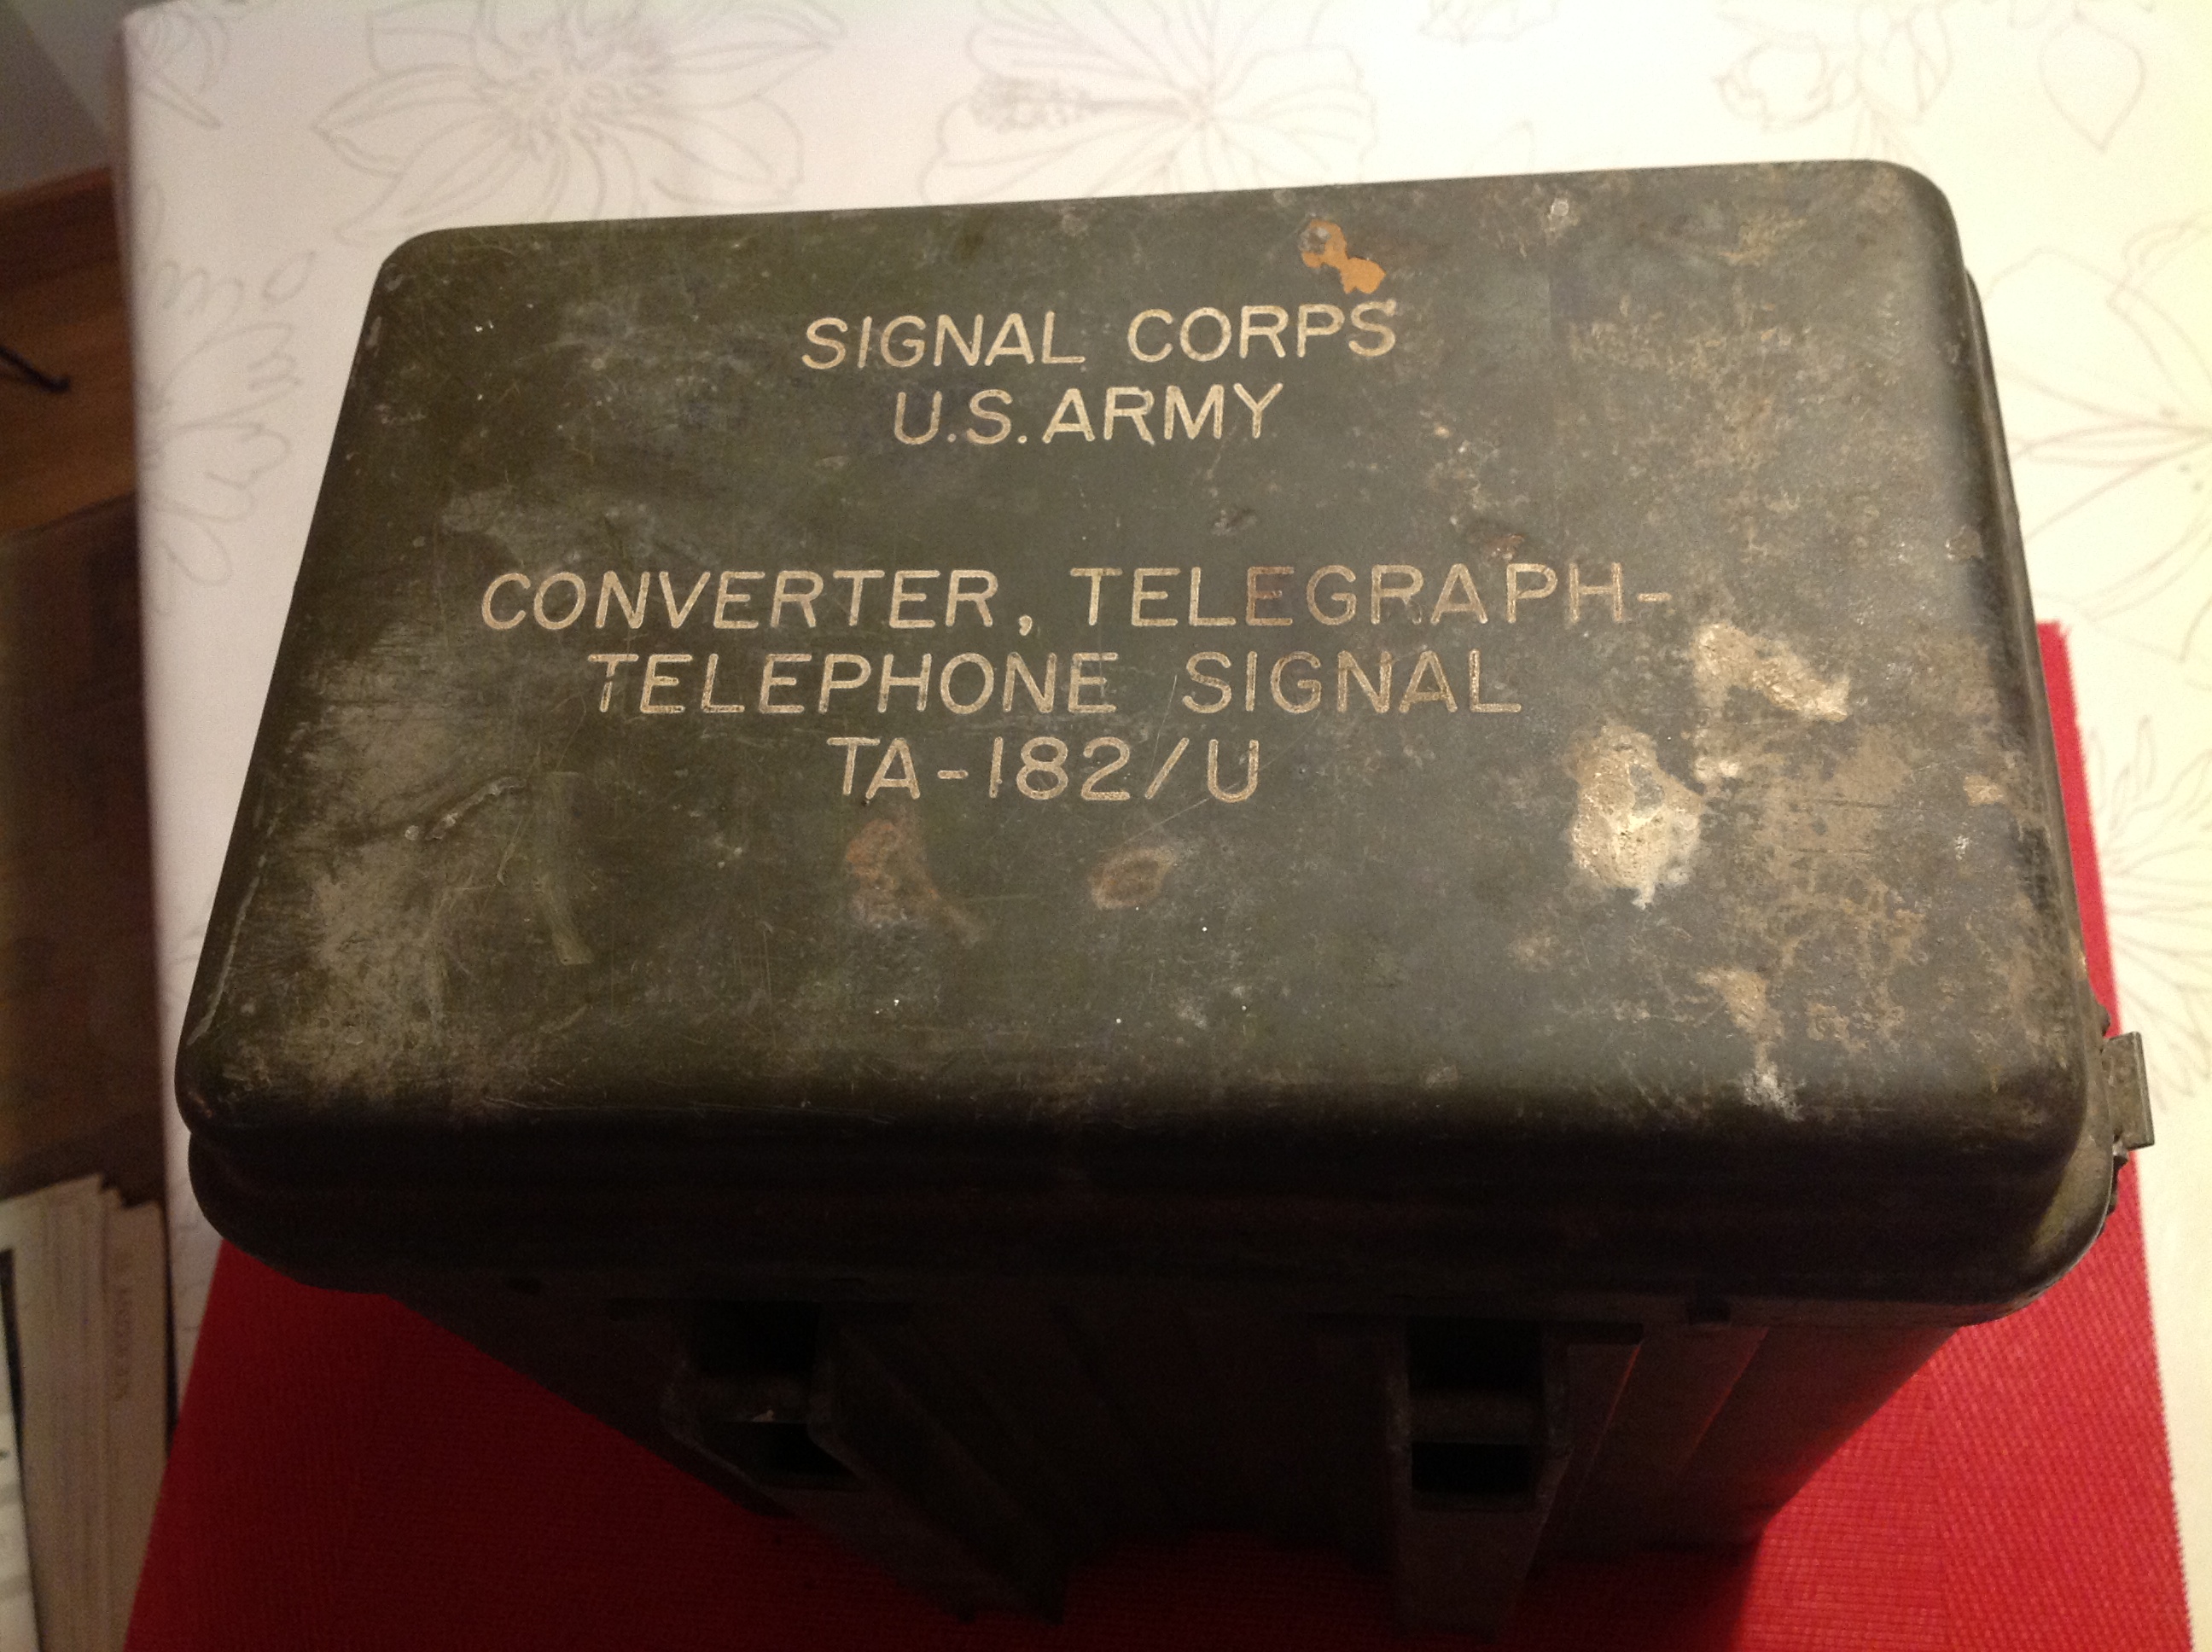 Telegraph-Telephone Converter TA-182/U Signal Corps U.S. Army